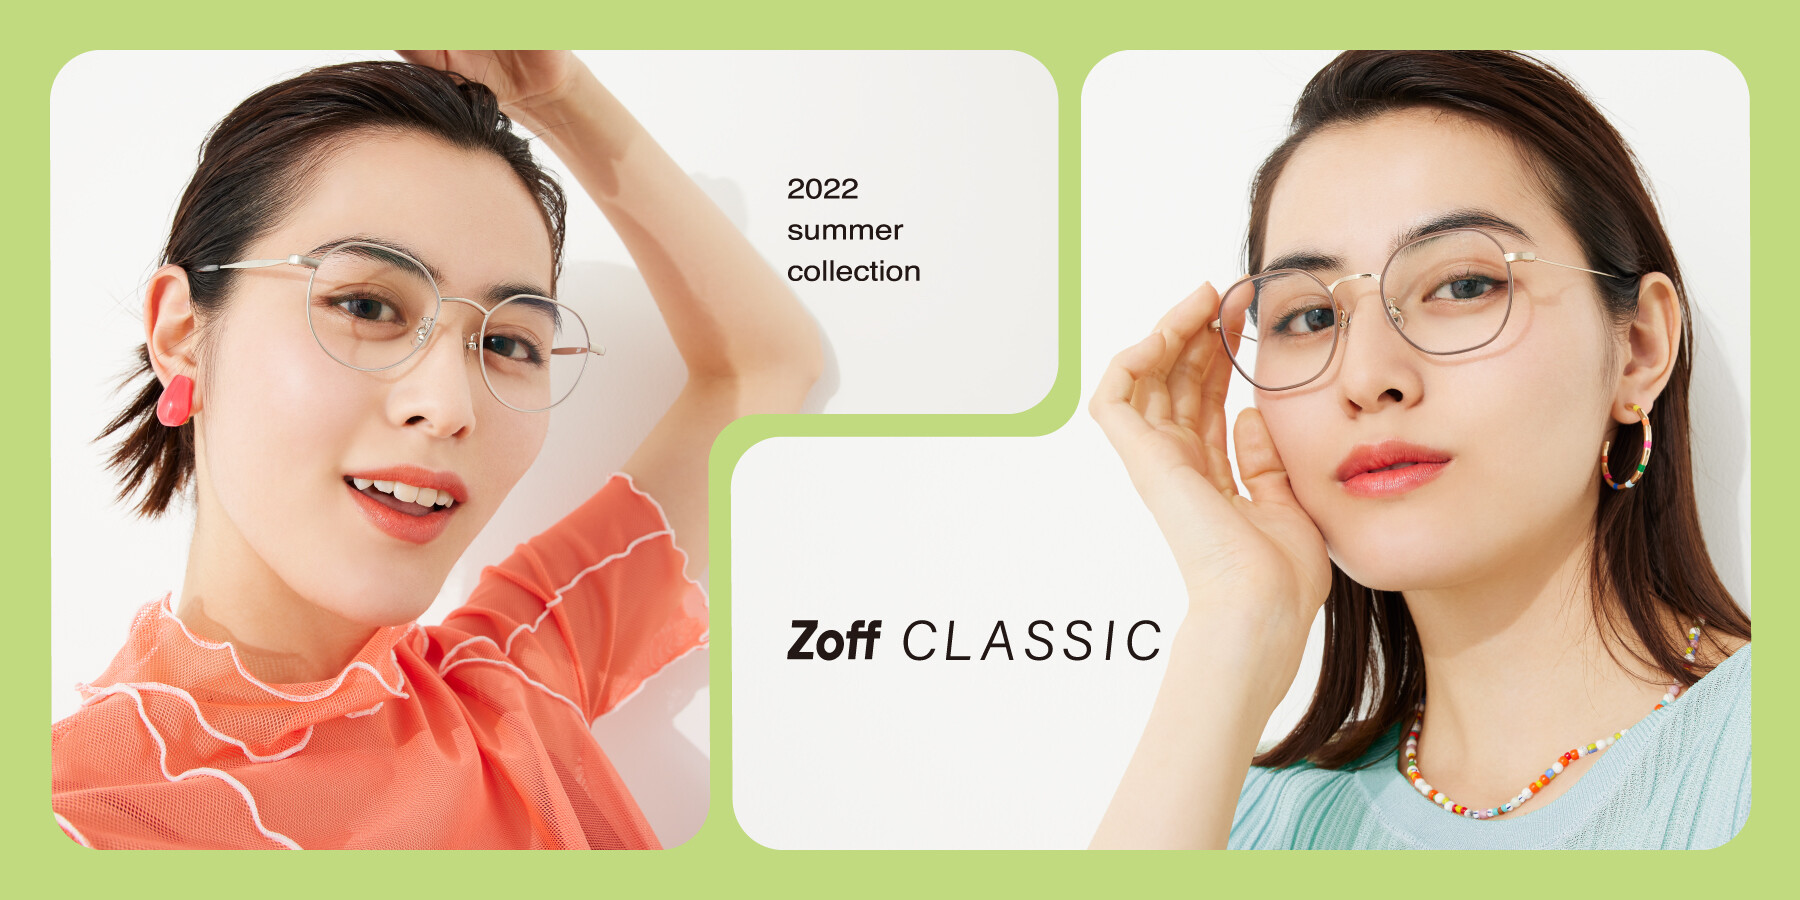 「Zoff CLASSIC SUMMER COLLECTION」が4月28日(木)から発売